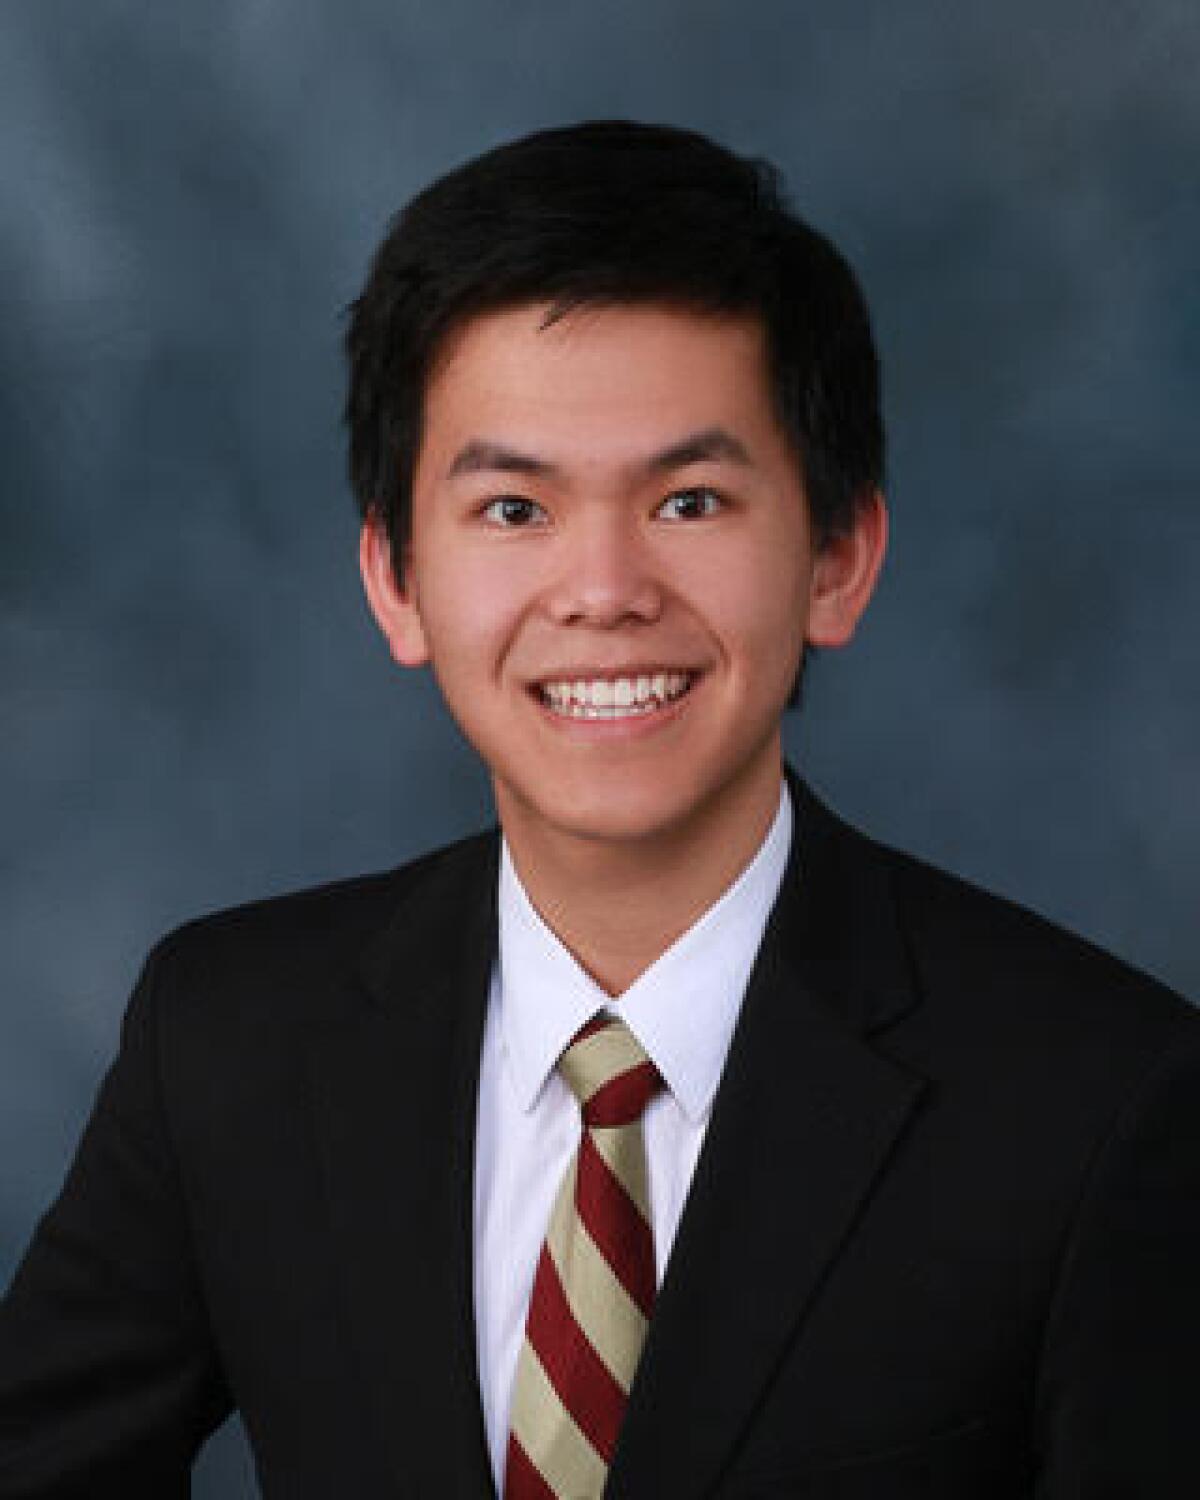 Jeffrey Wang, a senior at The Bishop's School in La Jolla, is a finalist in the 2021 Regeneron Science Talent Search.